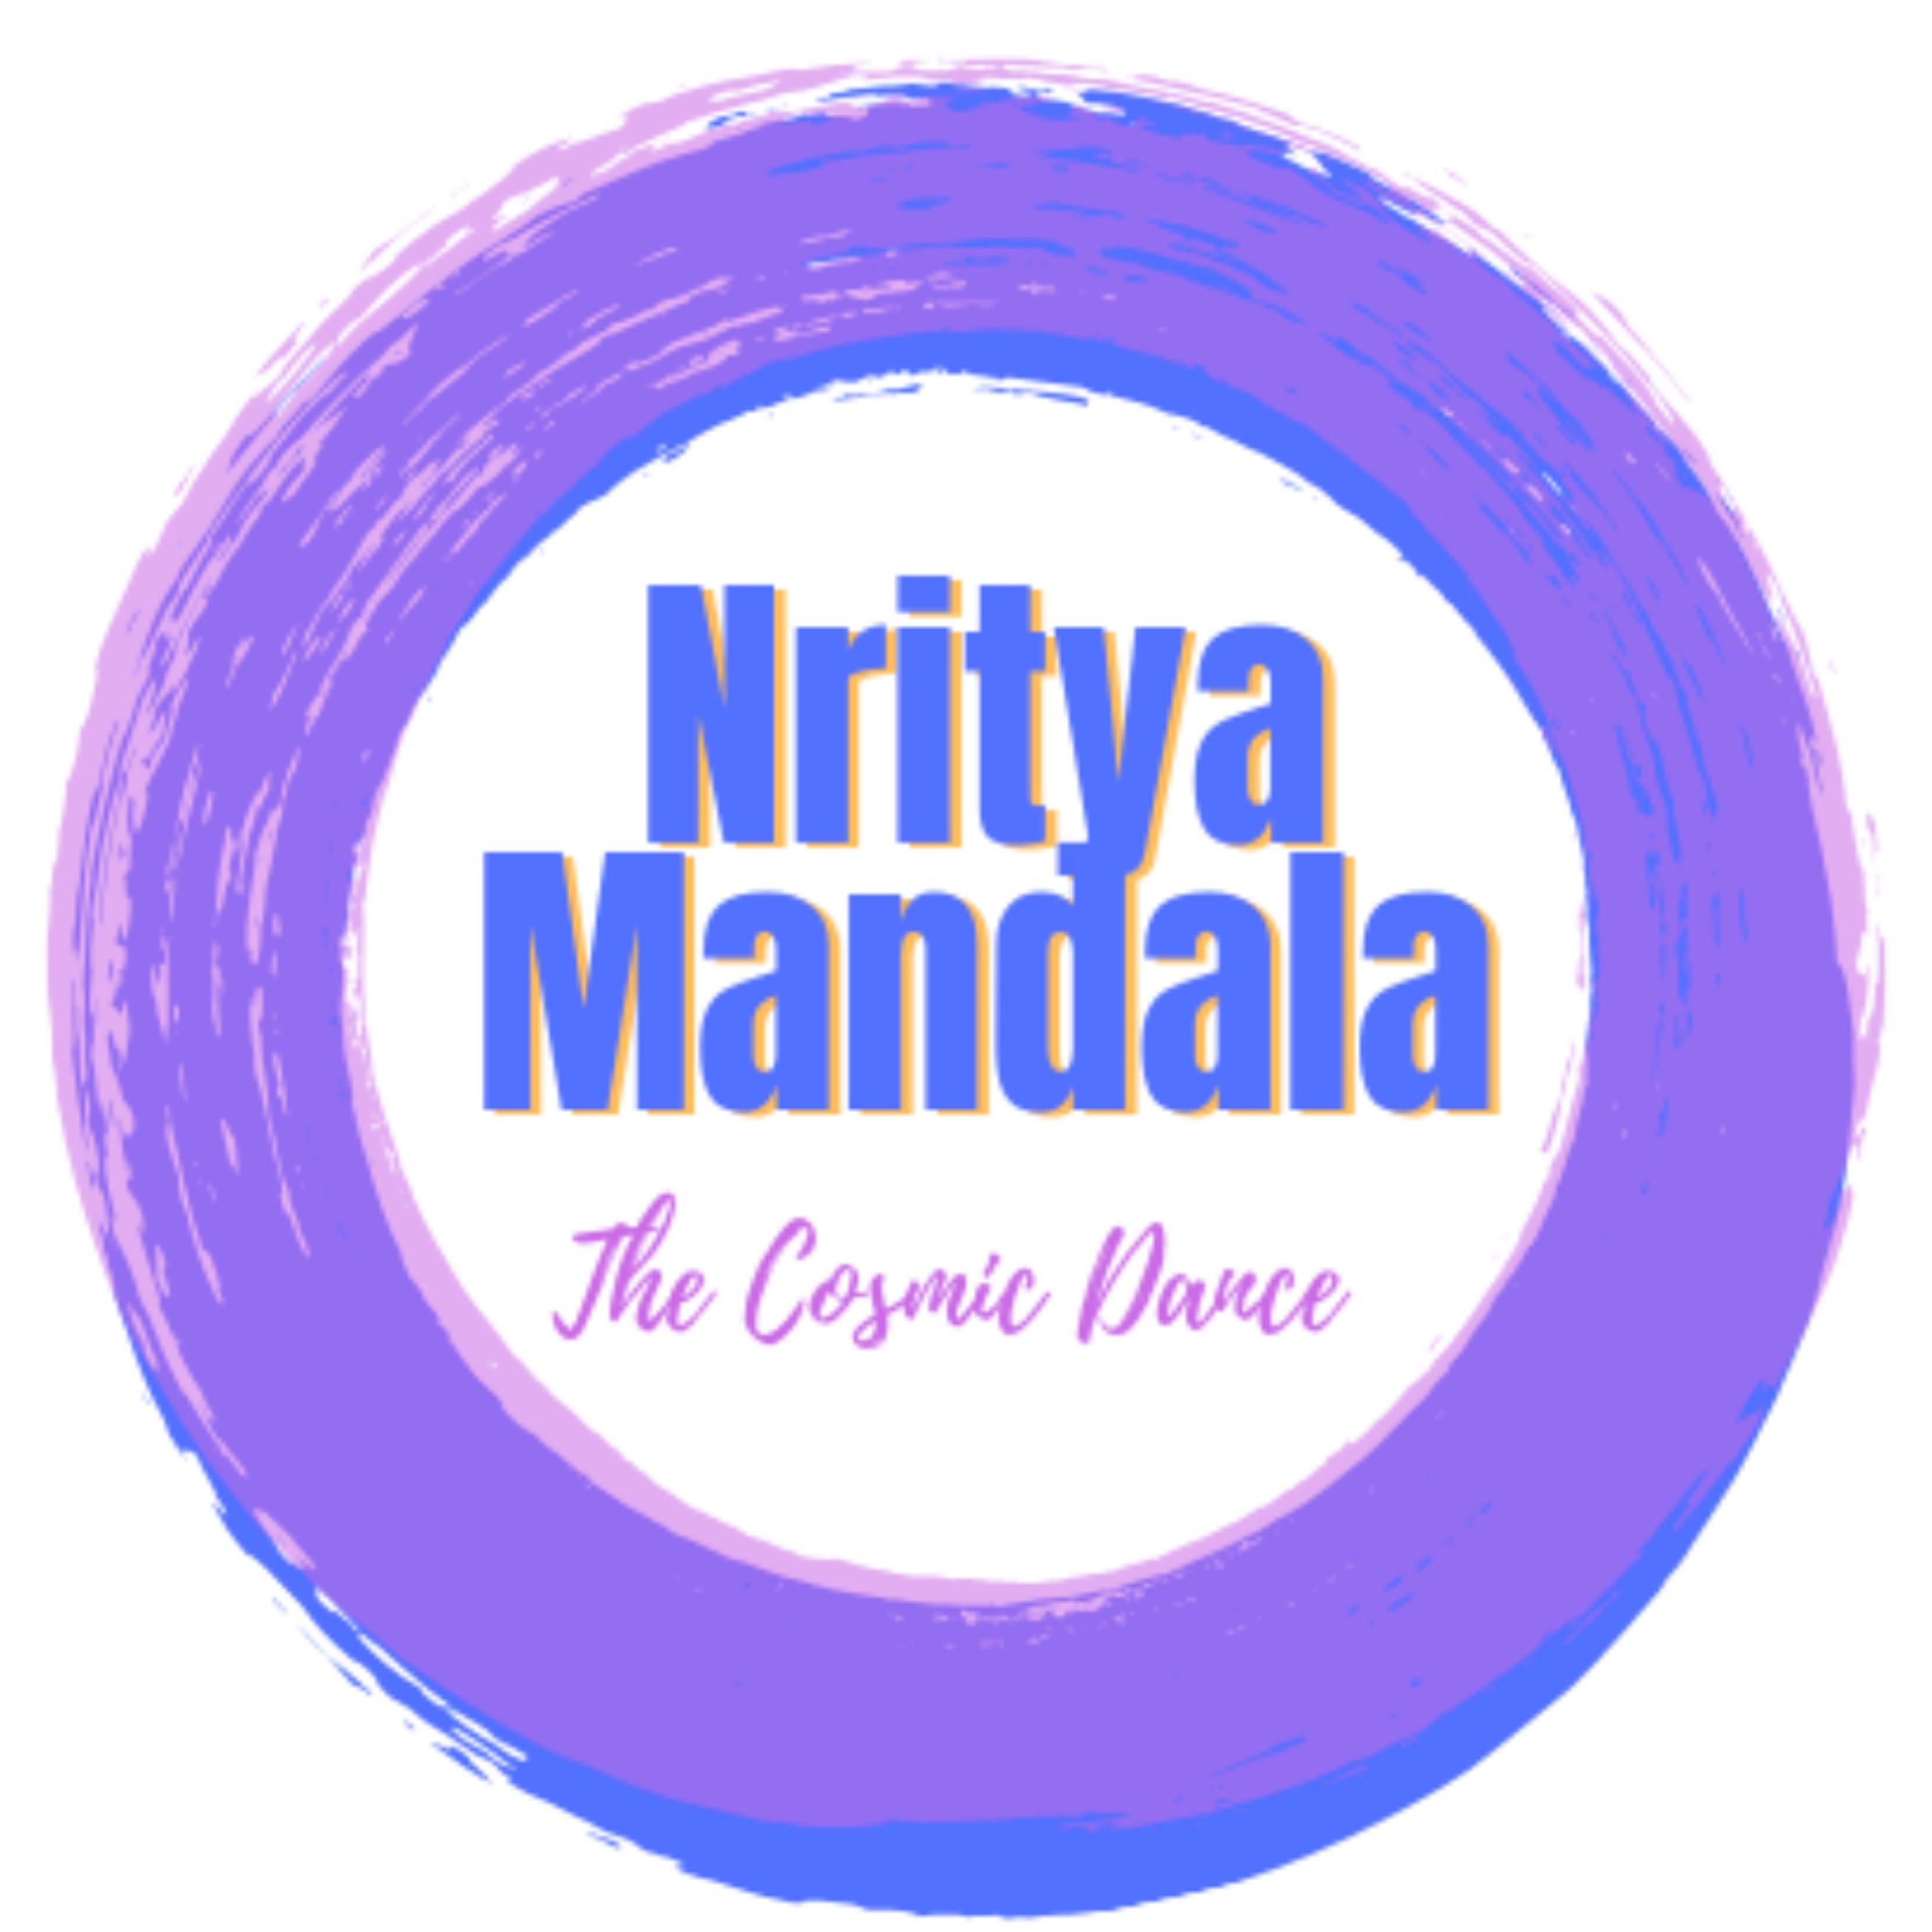 Nritya Mandala